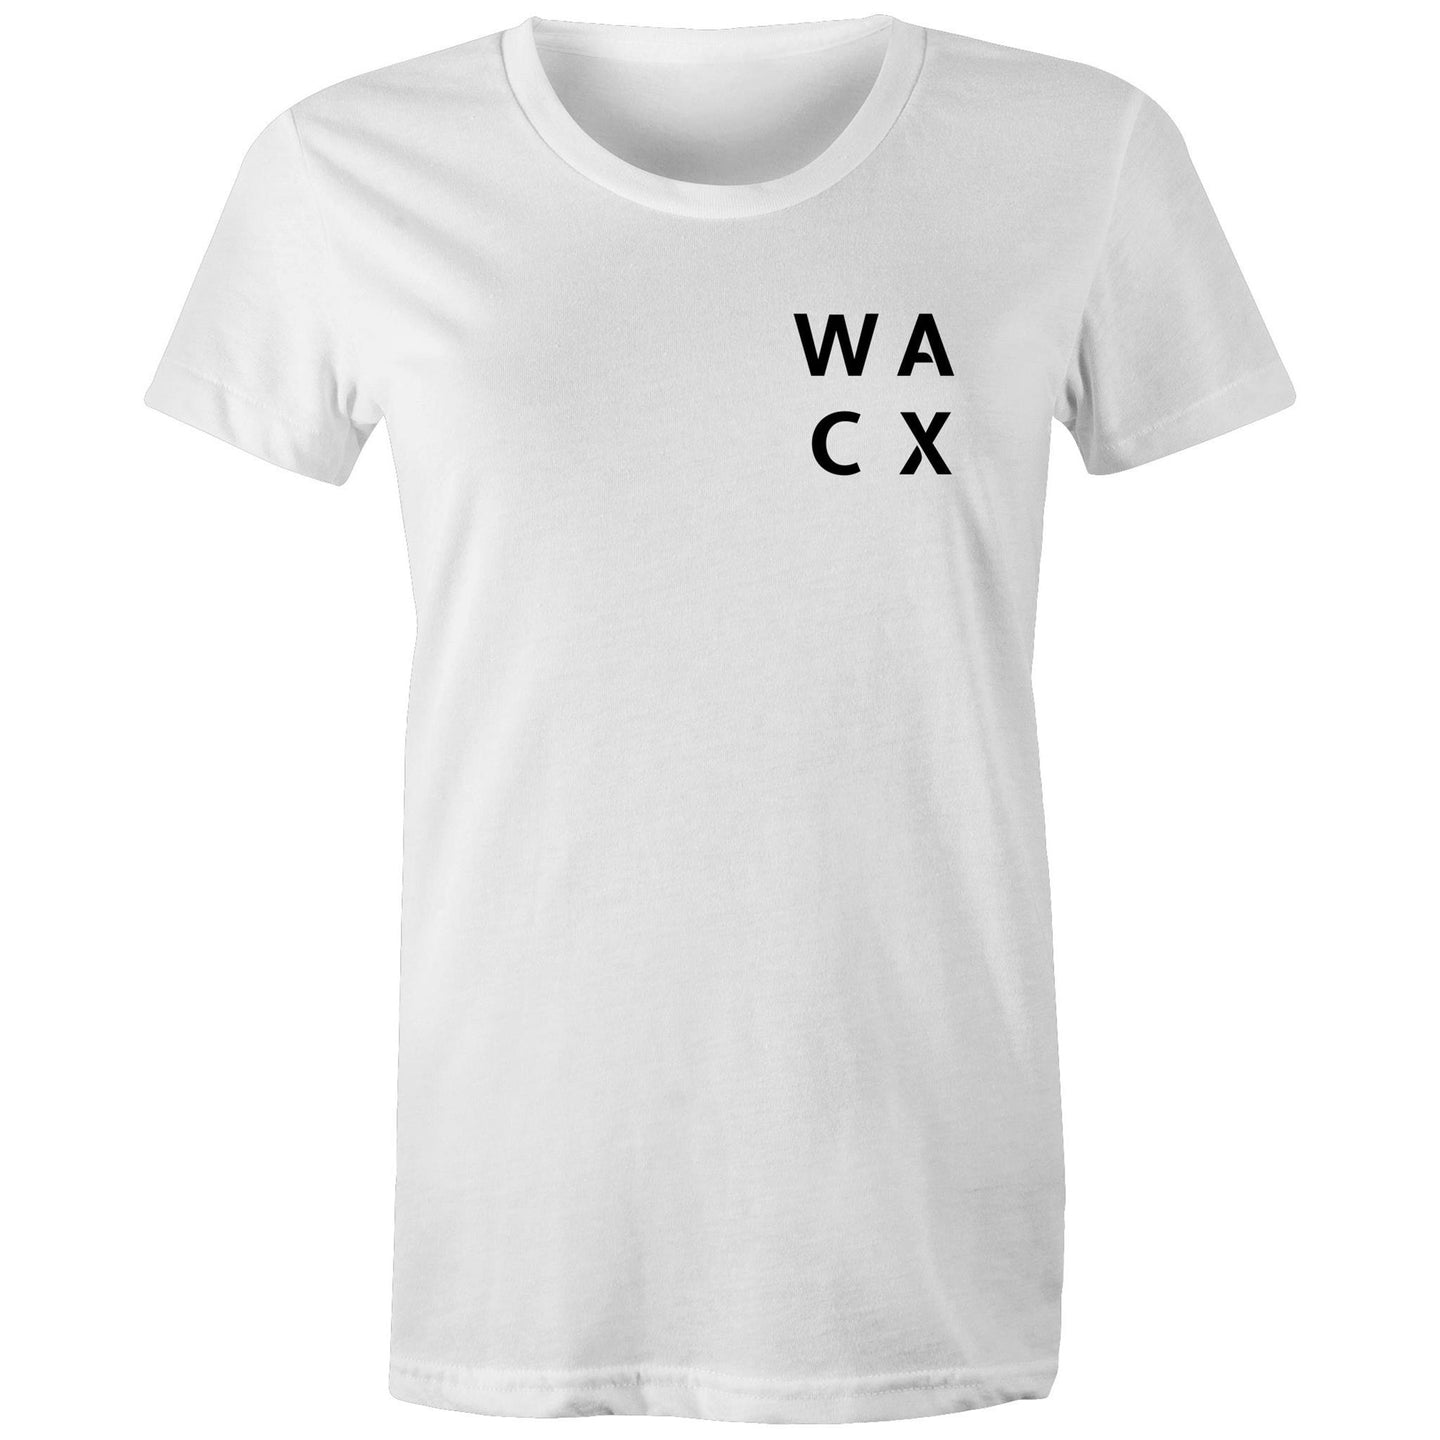 WACX Women's T-shirt - White